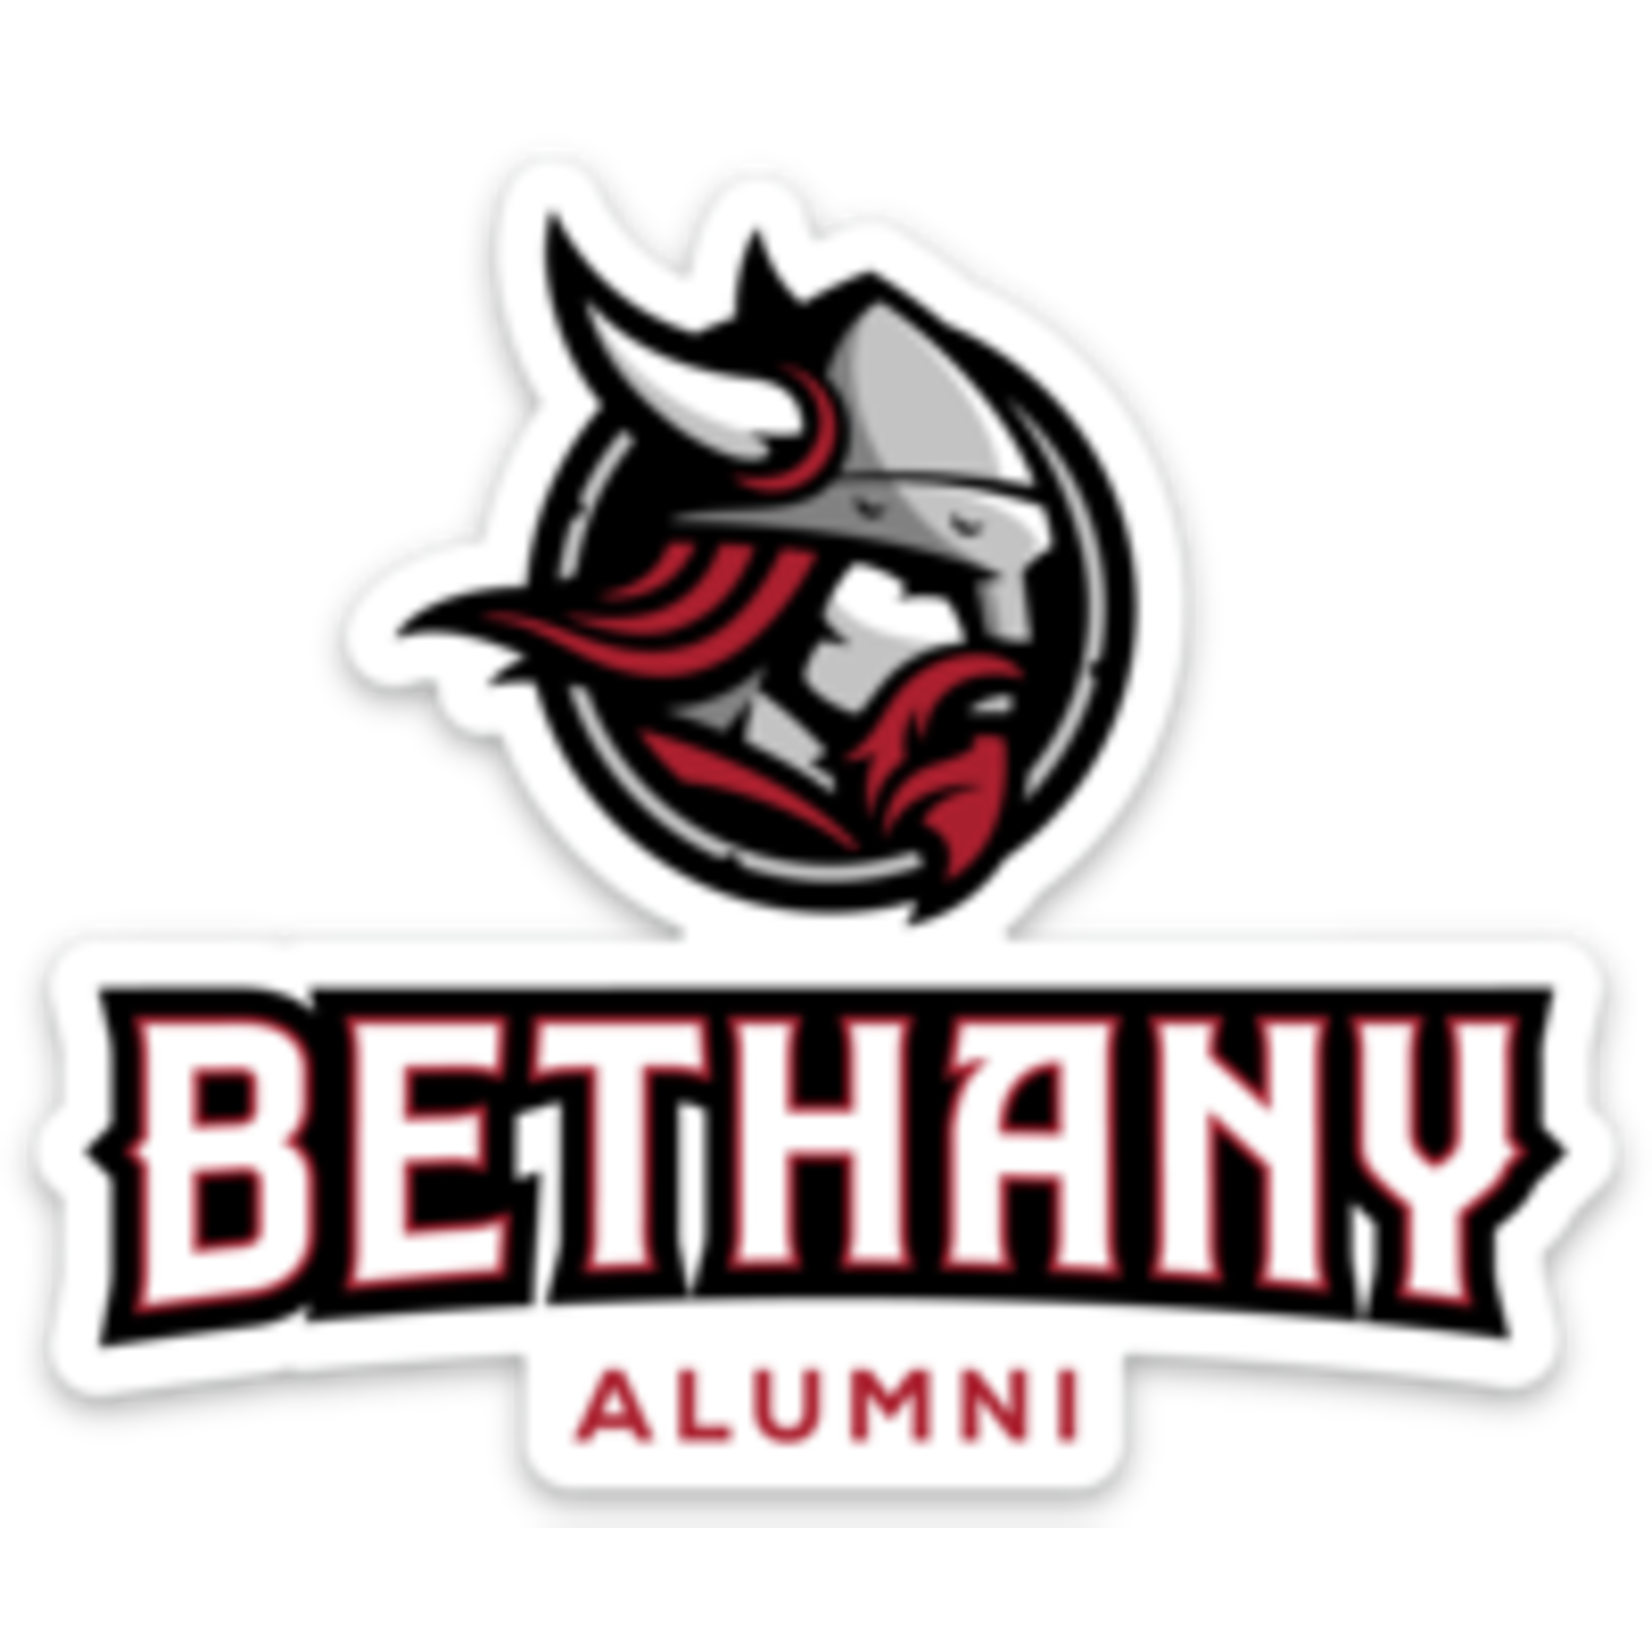 Sticker BLC - Bethany Alumni